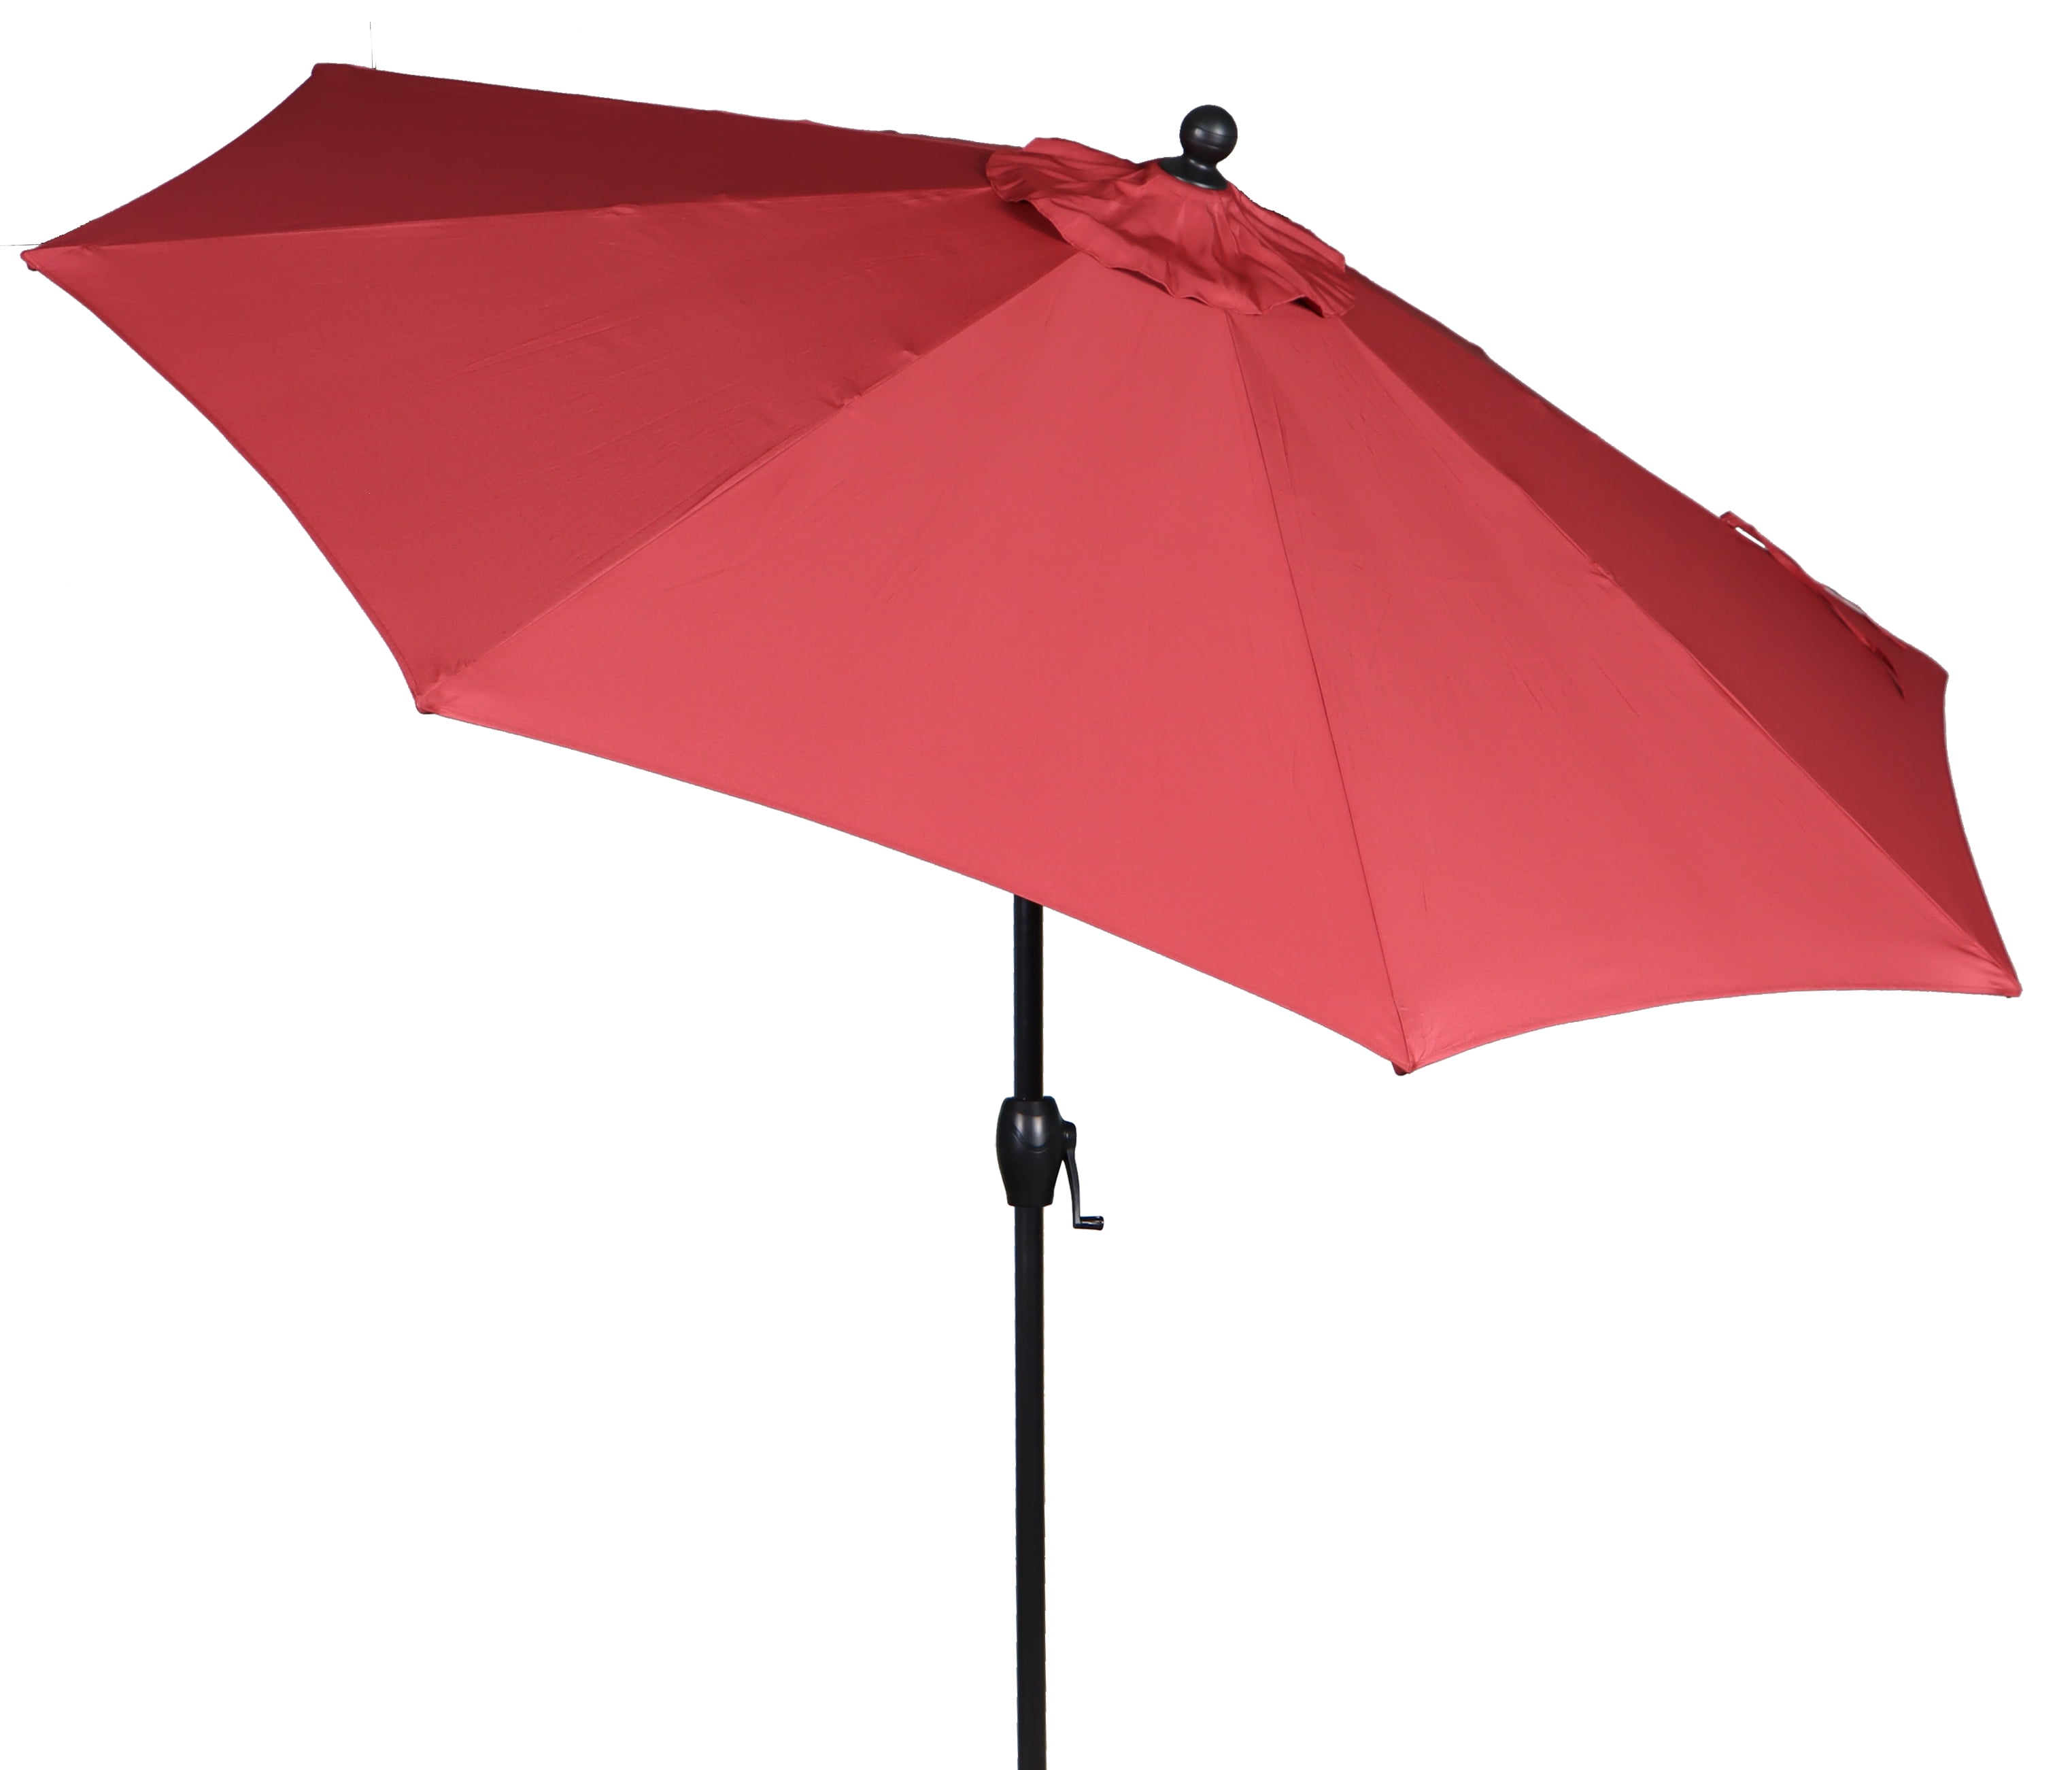 Arthur Conan Doyle Seaport samfund Better Homes & Gardens 9' Premium Patio Umbrella, Red - Walmart.com